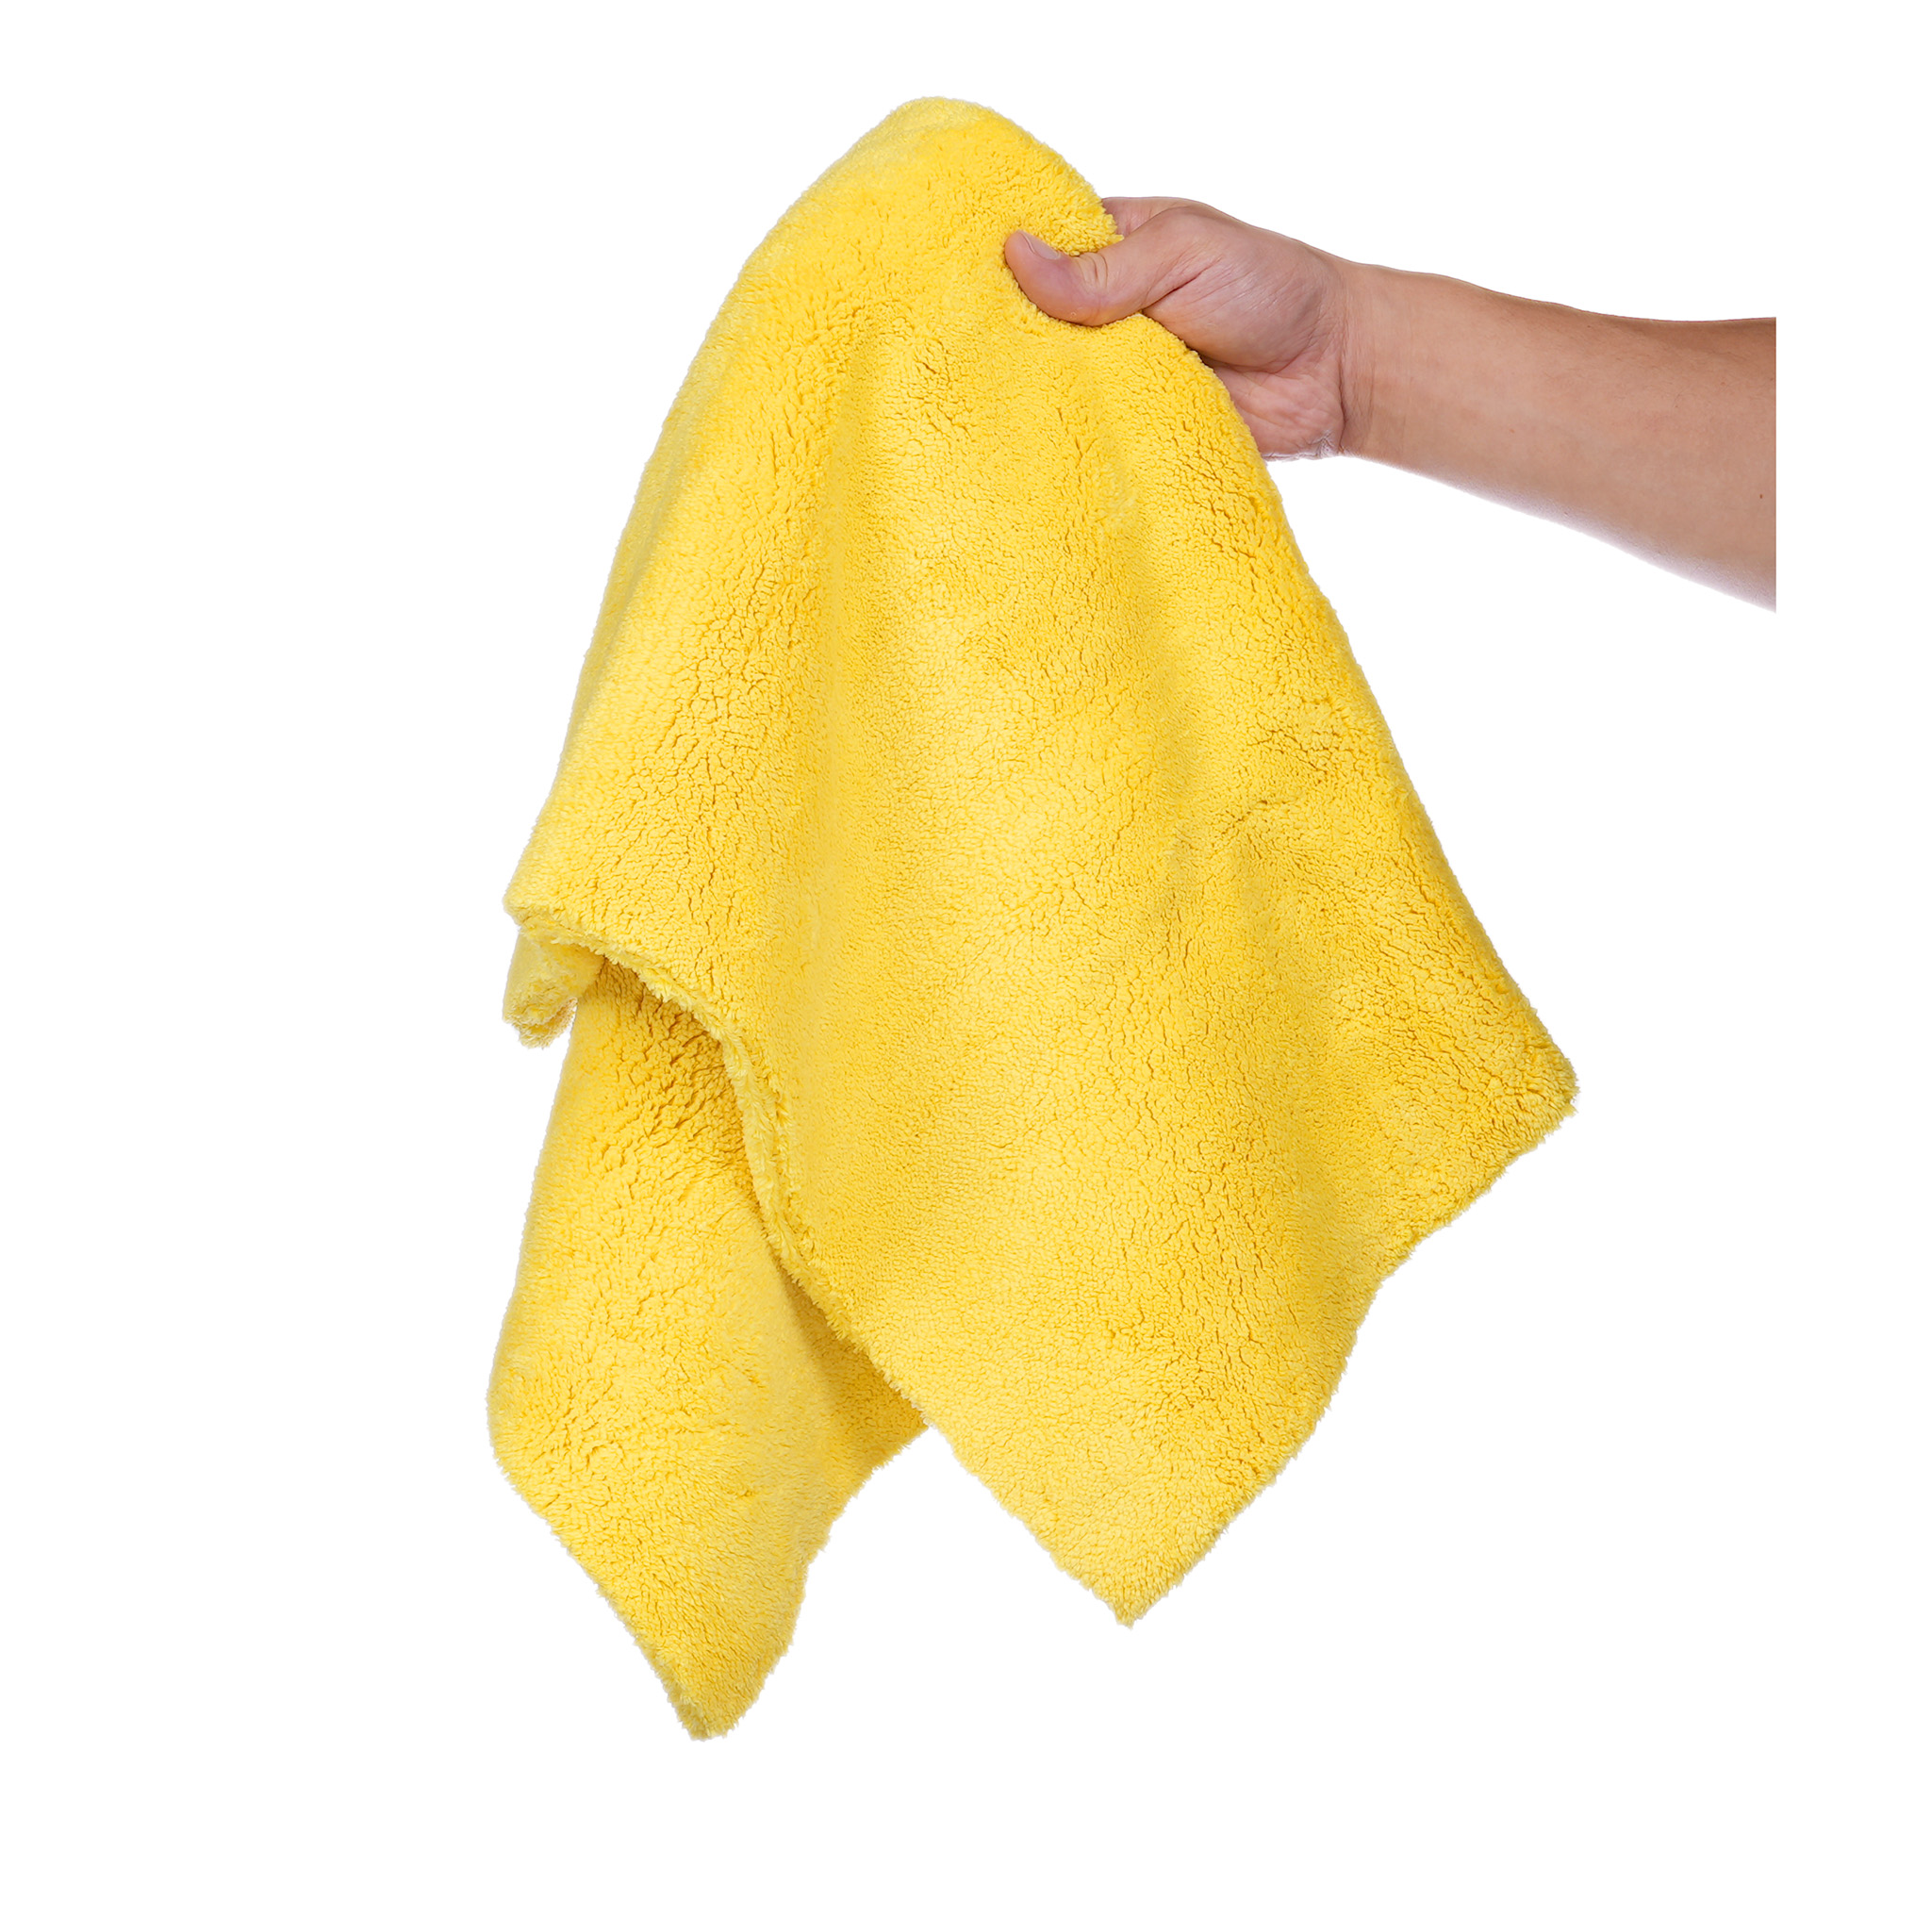 Kuivausliina CAR5 Drying Towel